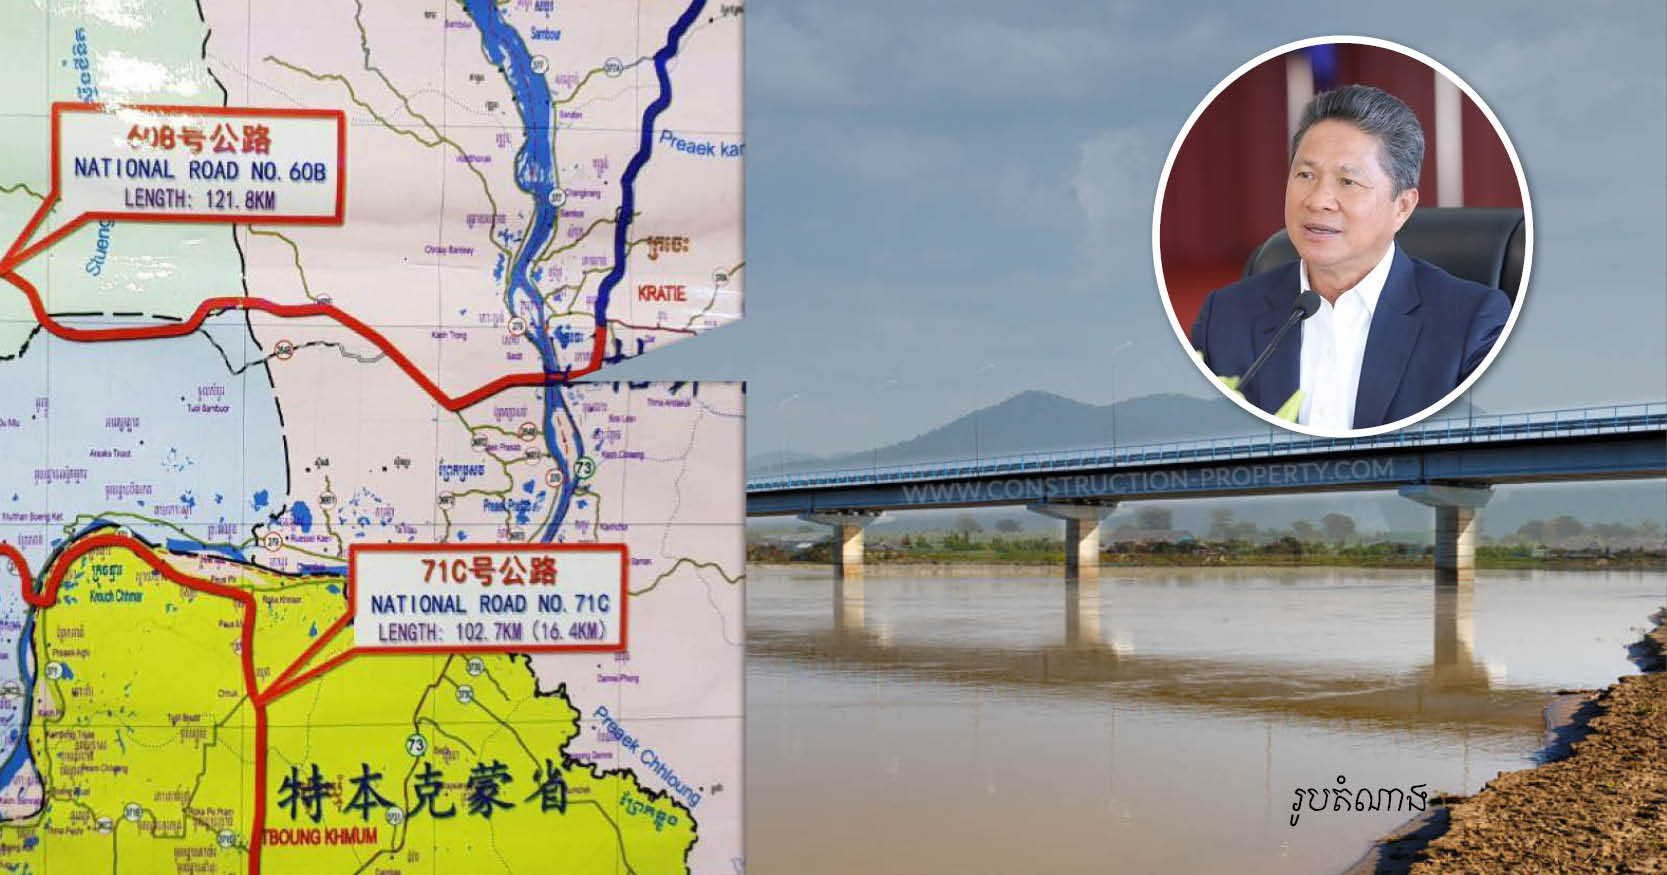 Transport Minister: Work on Kratie-Kampong Thom Bridge to Start This Year